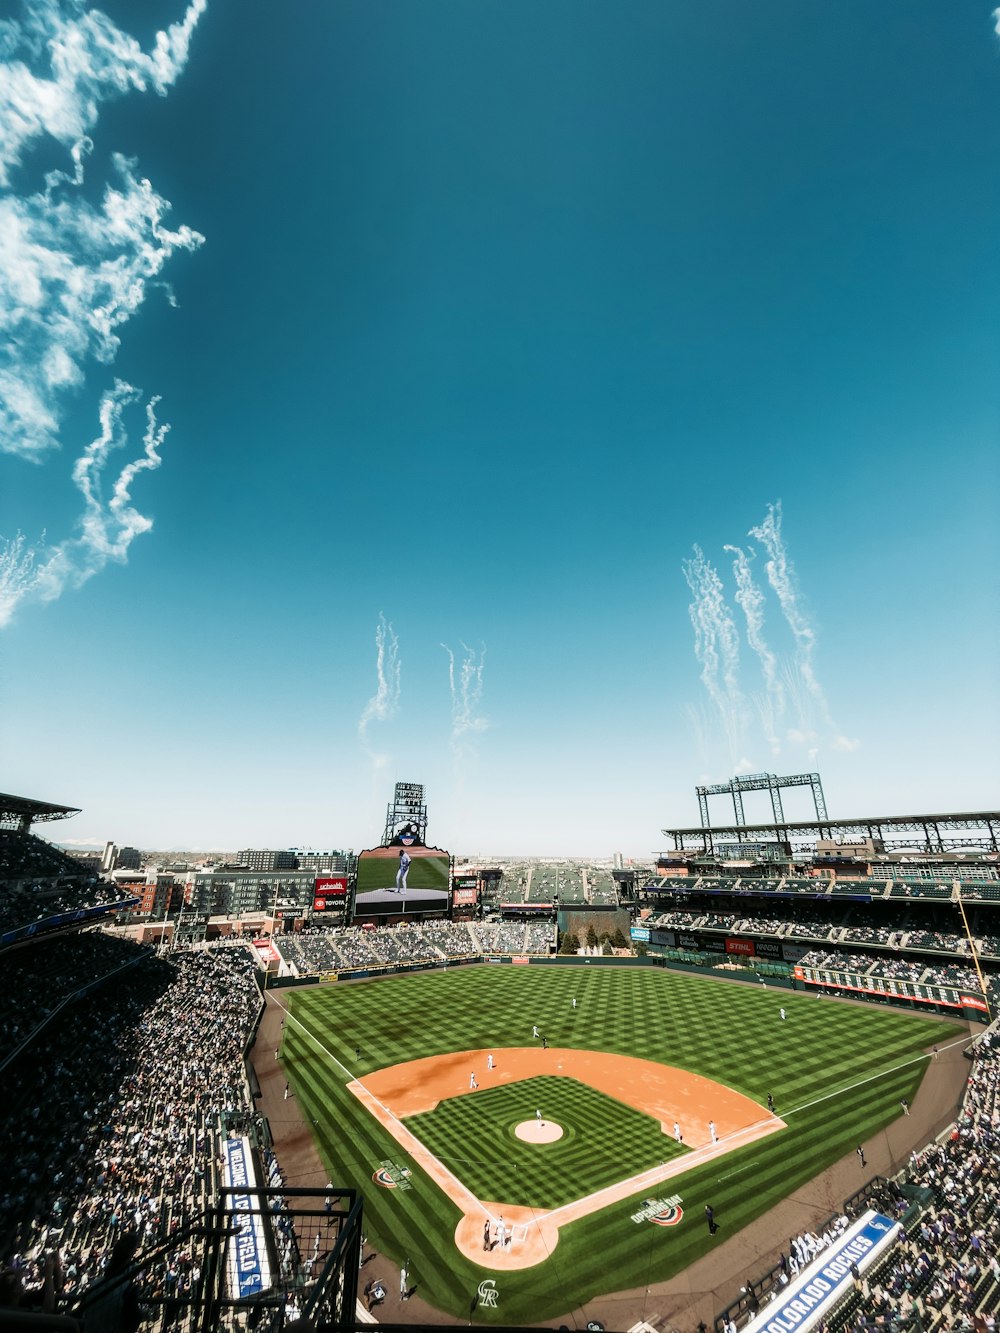 Best 100+ Baseball Stadium Pictures | Download Free Images on Unsplash